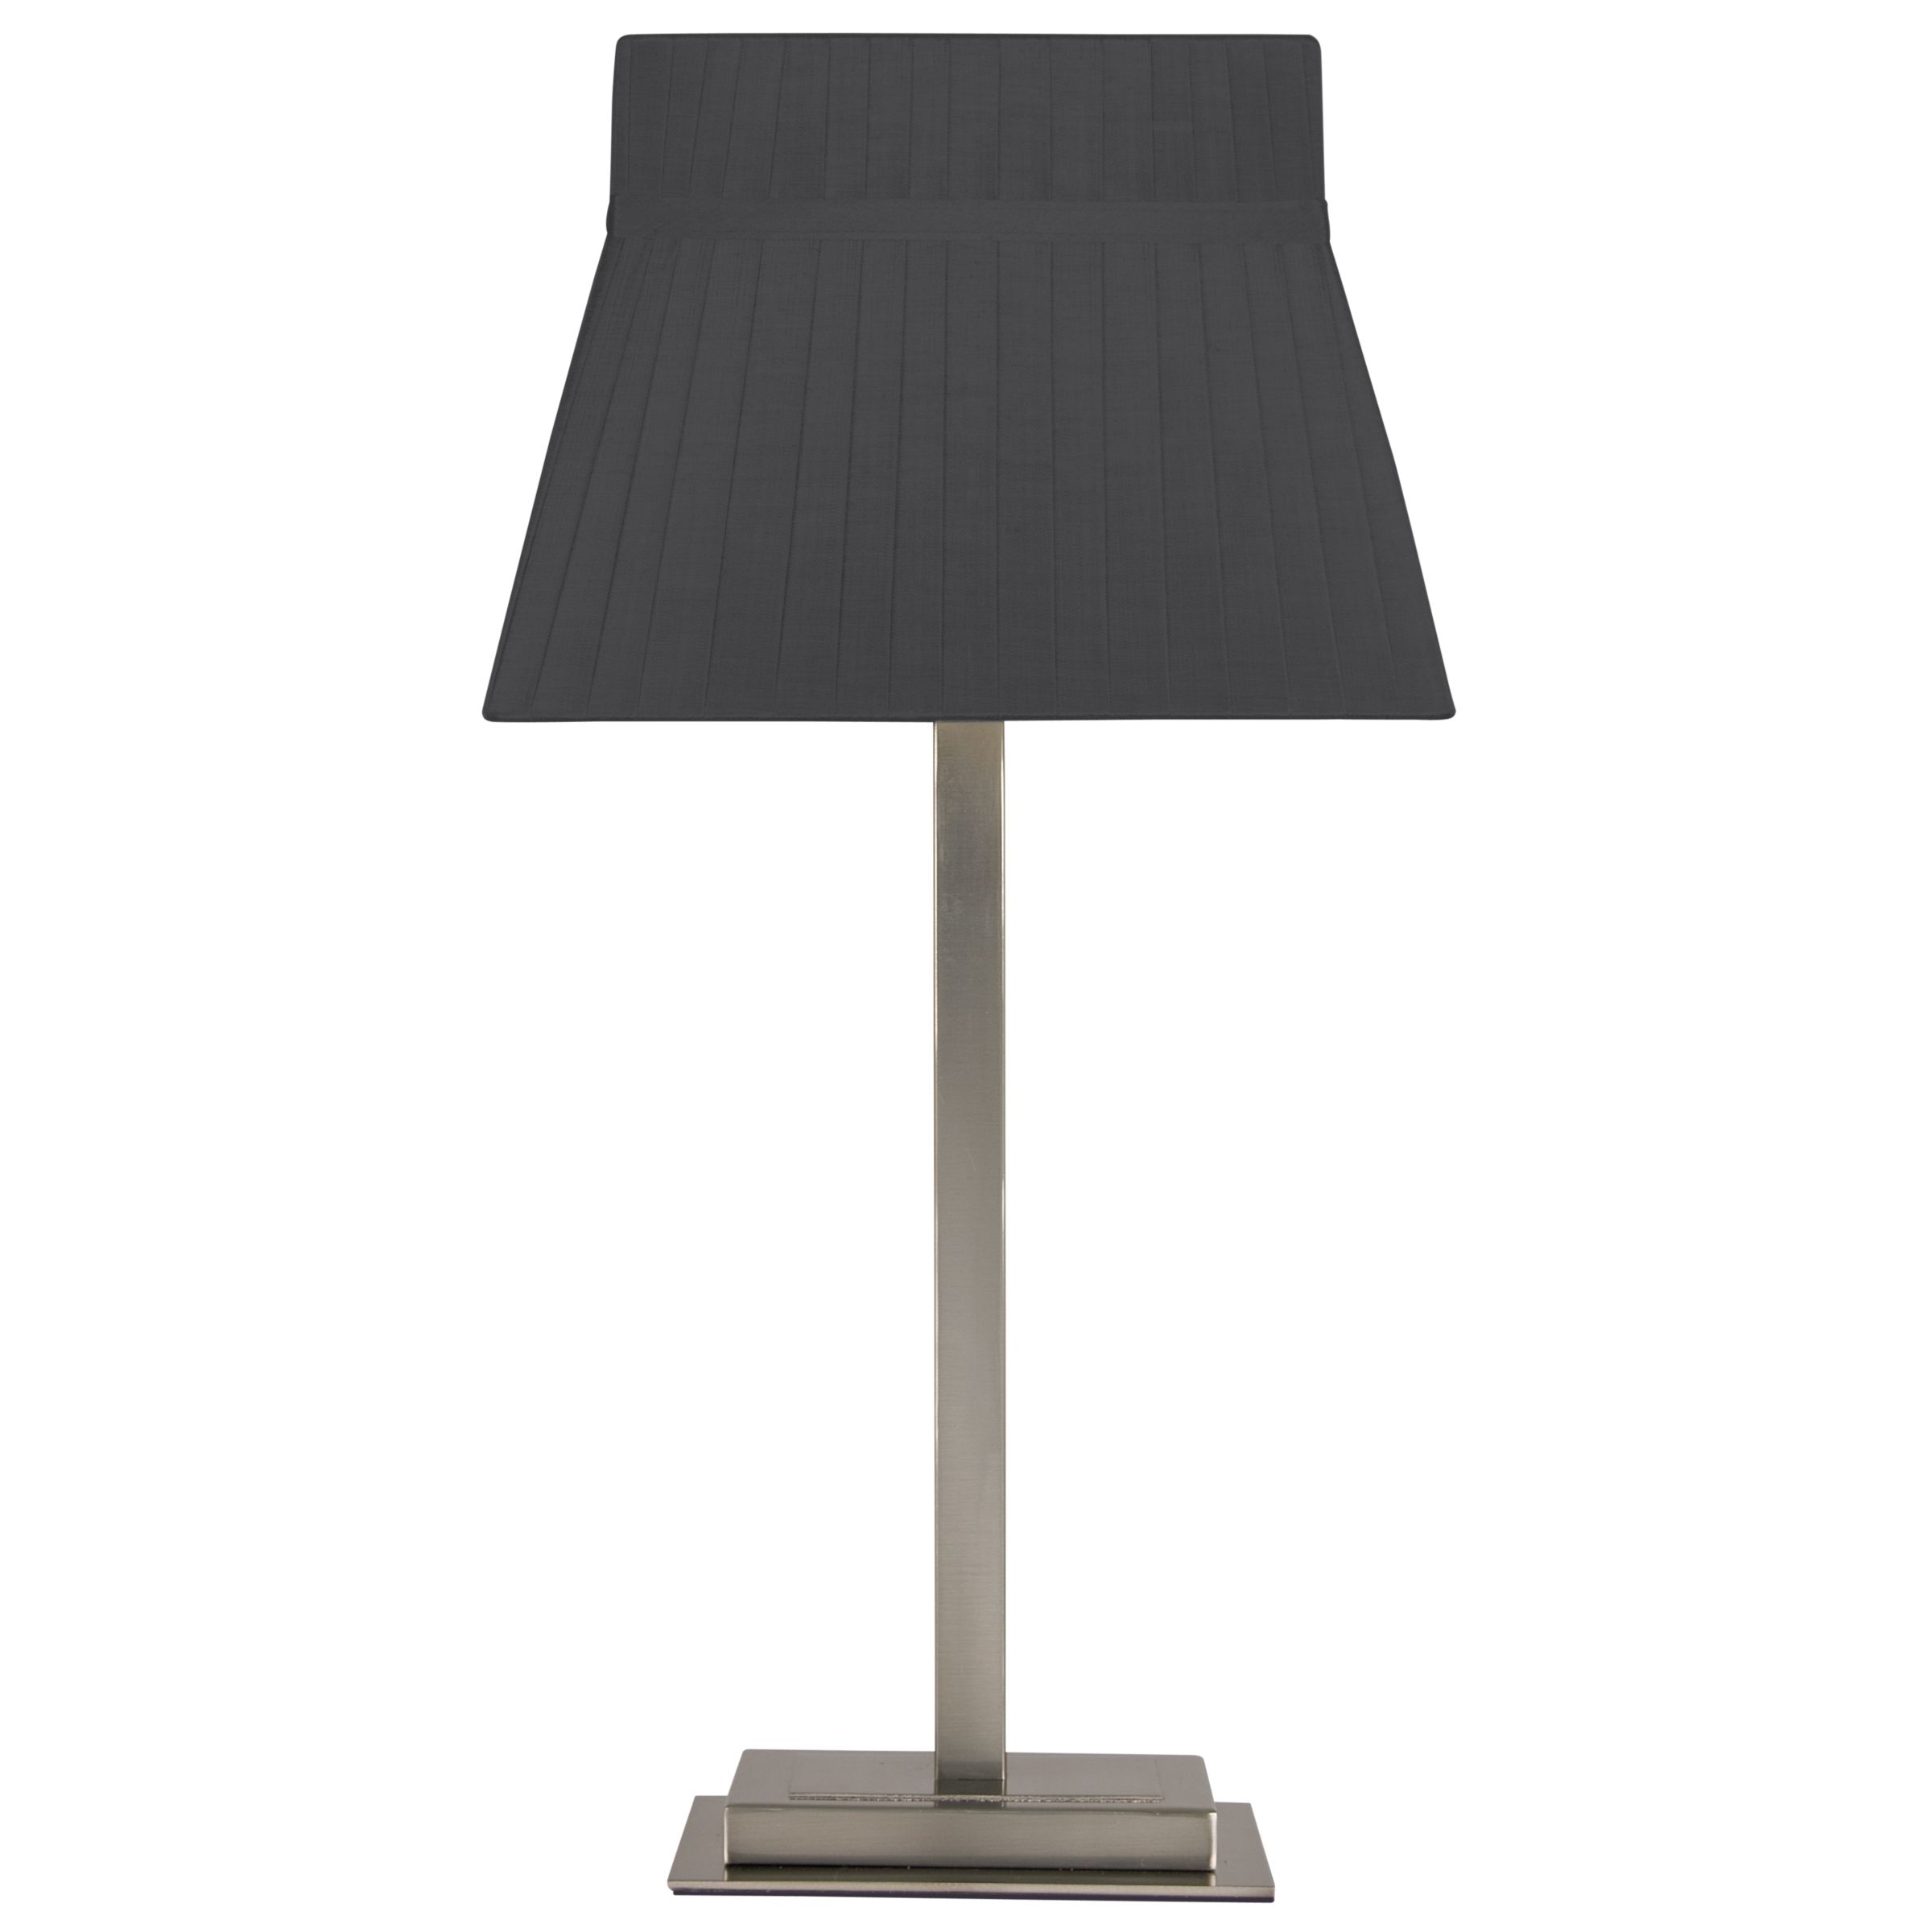 John Lewis Audrey Square Shade Table Lamp, Black